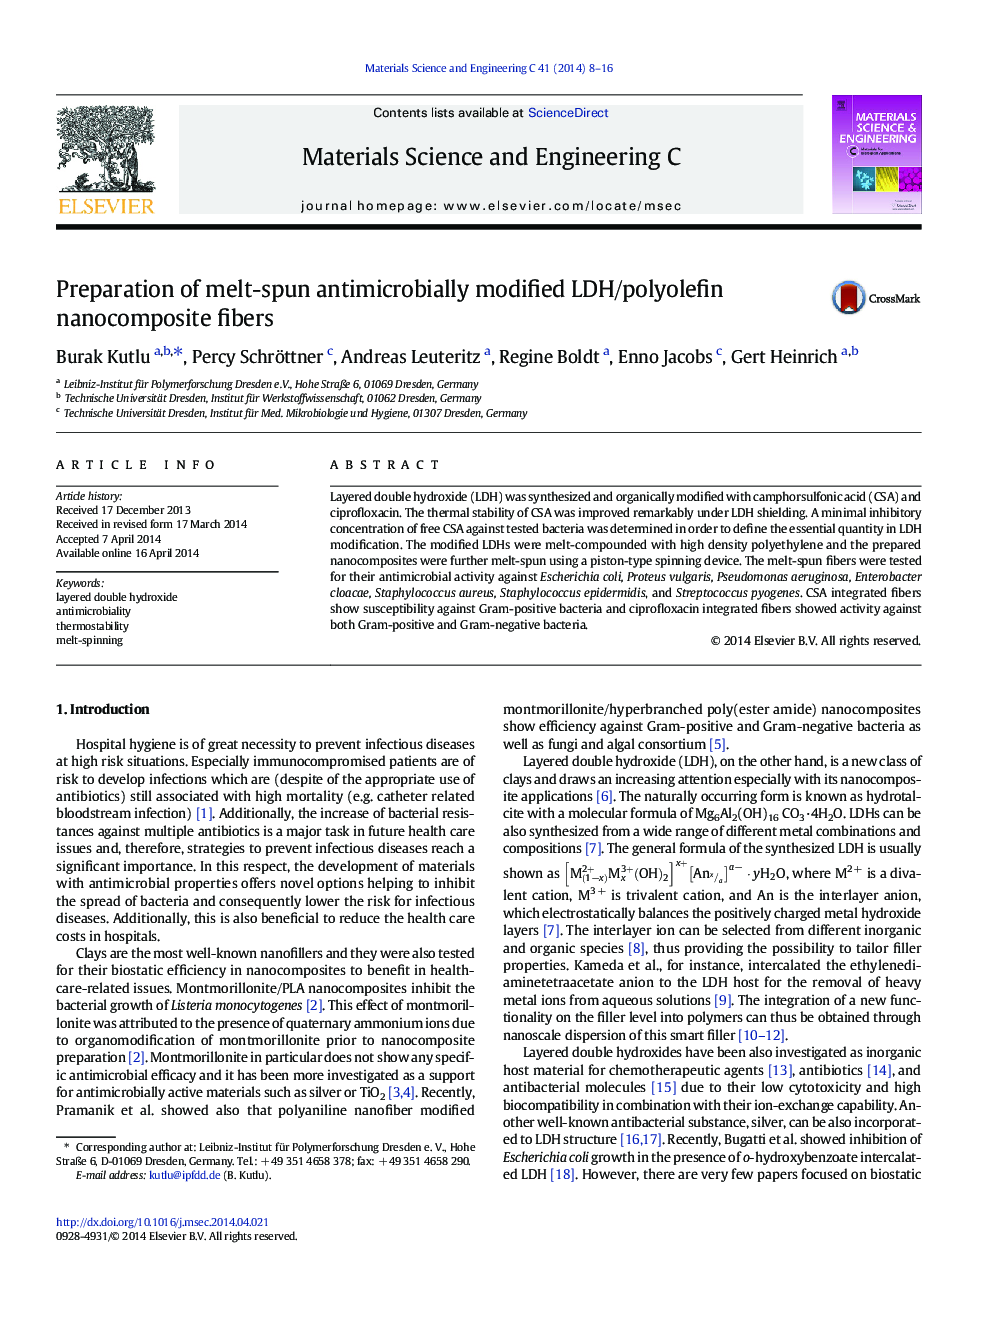 Preparation of melt-spun antimicrobially modified LDH/polyolefin nanocomposite fibers